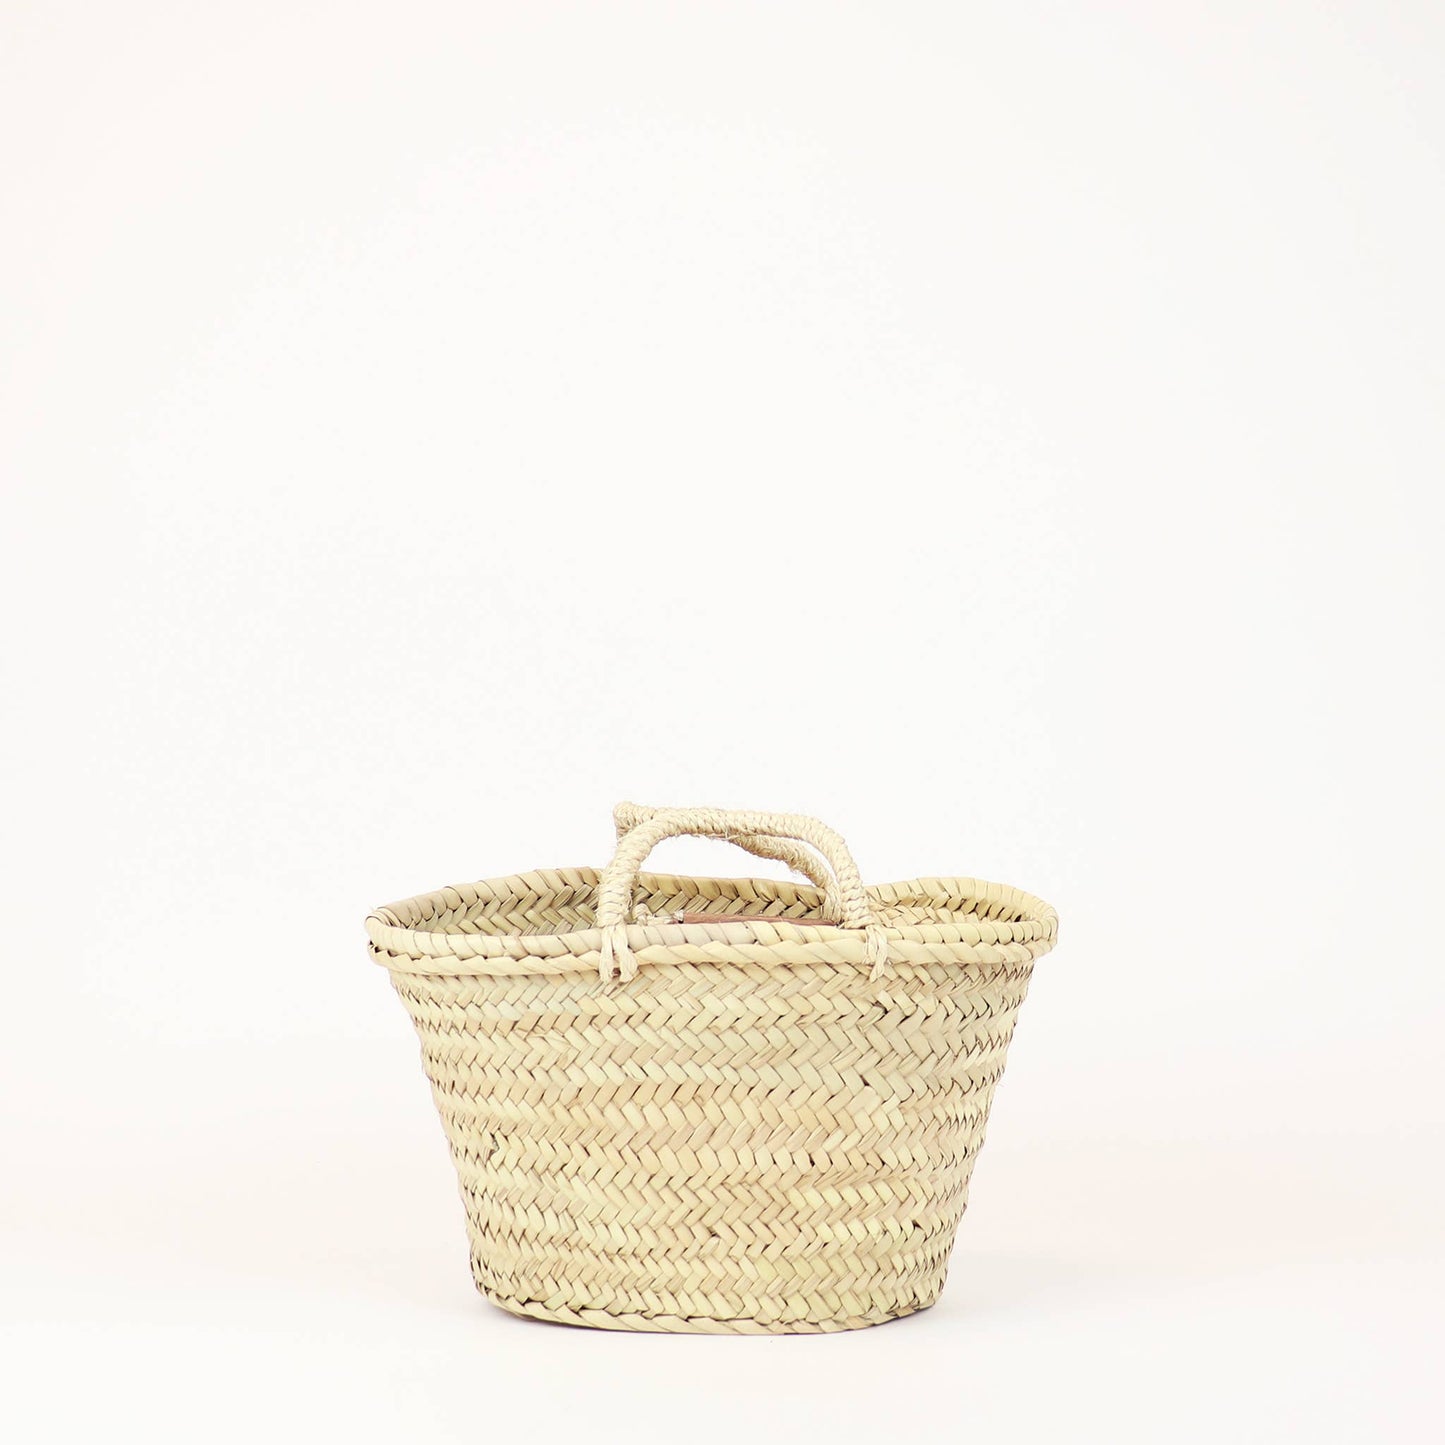 Straw Bag - Miami French Market Basket